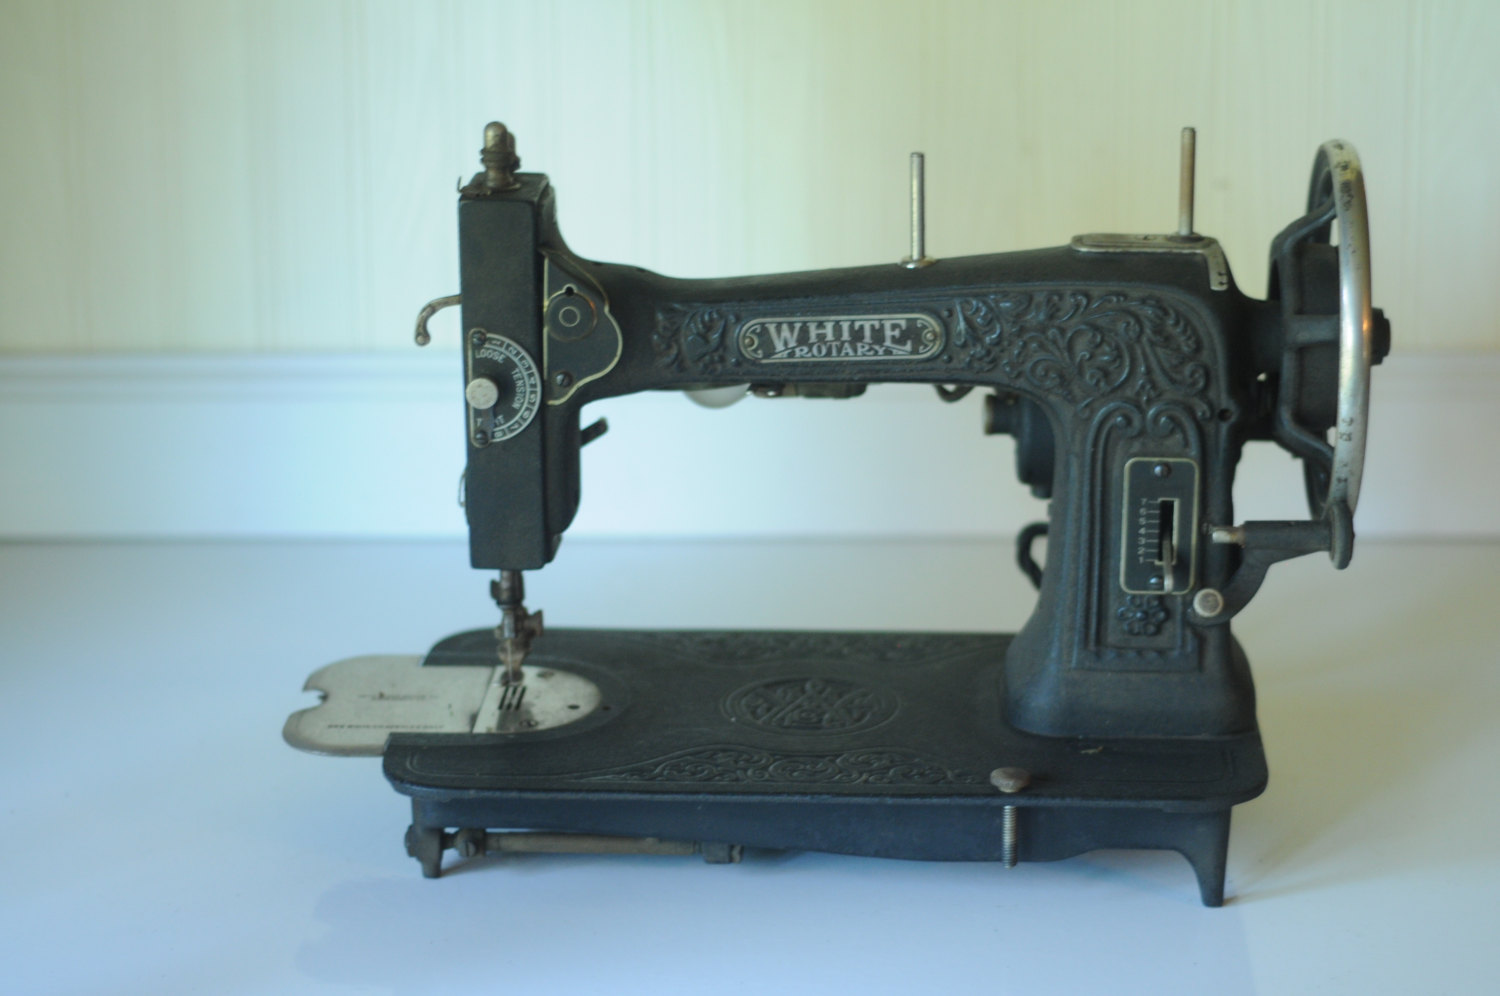 White rotary sewing machine series 77 serial numbers